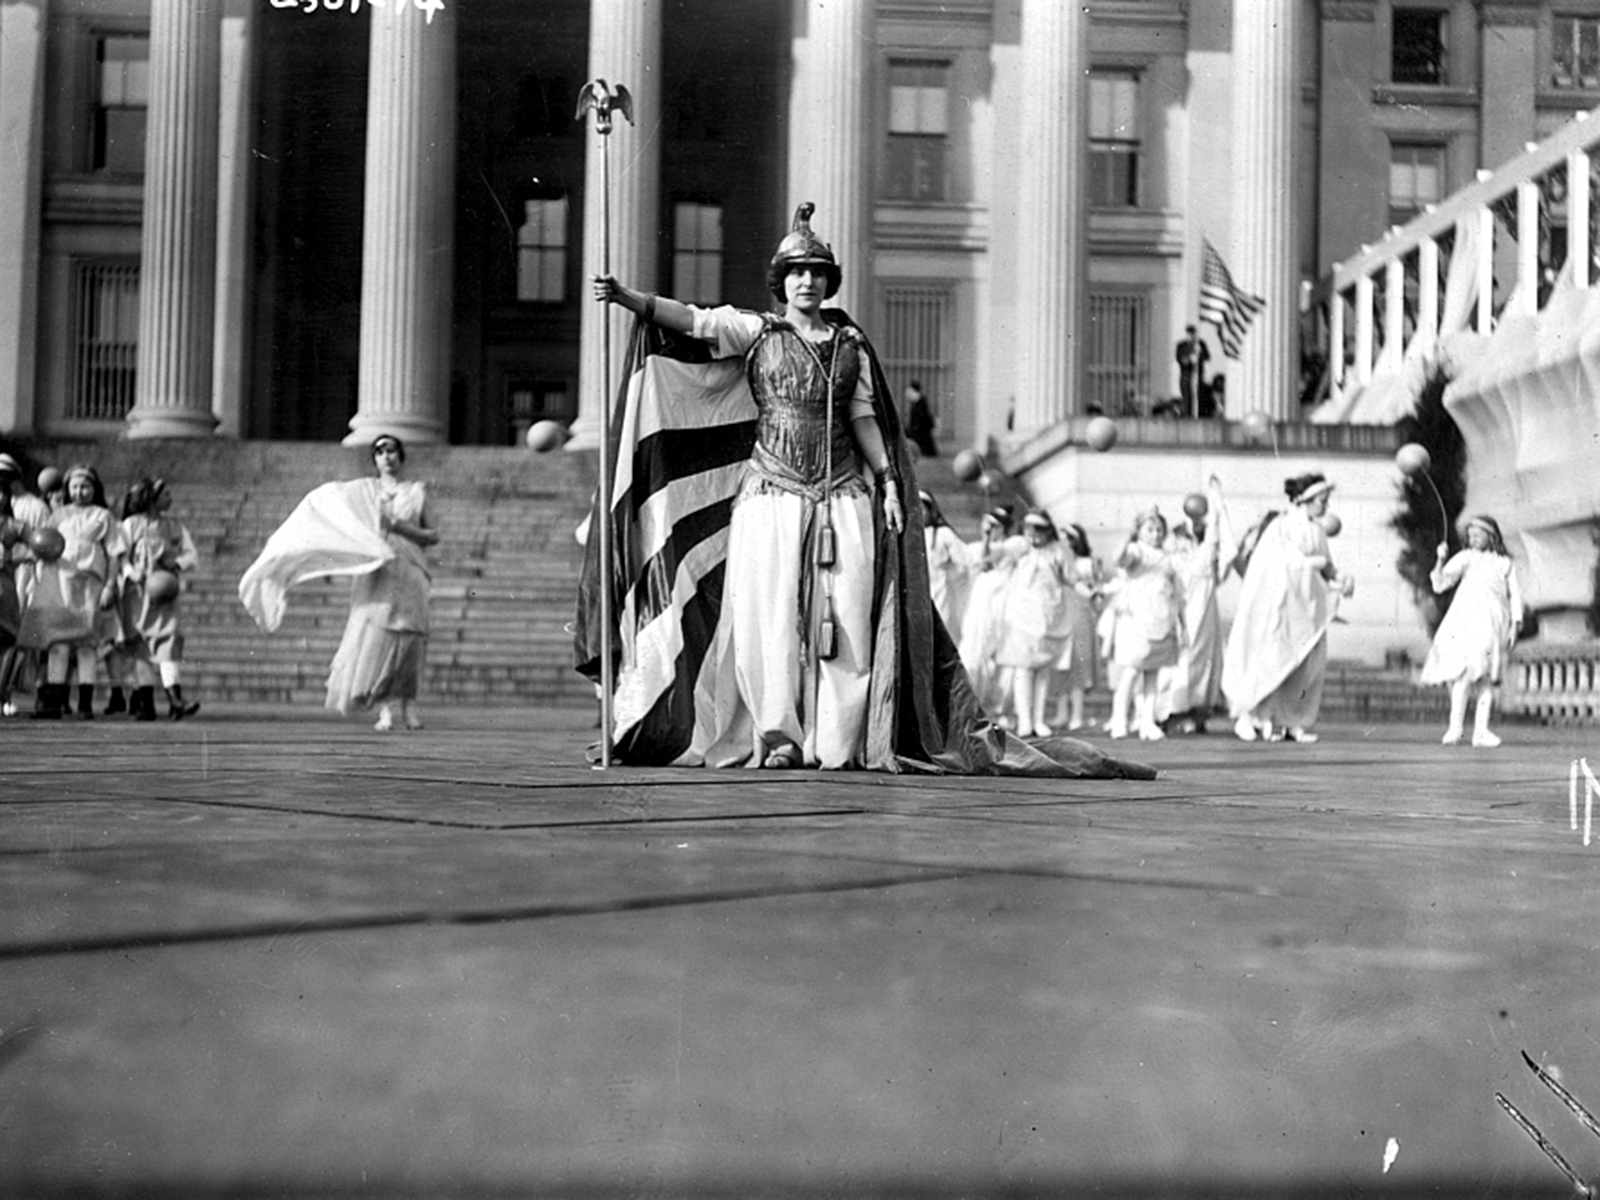 1913 Woman Suffrage Procession (U.S. National Park Service)